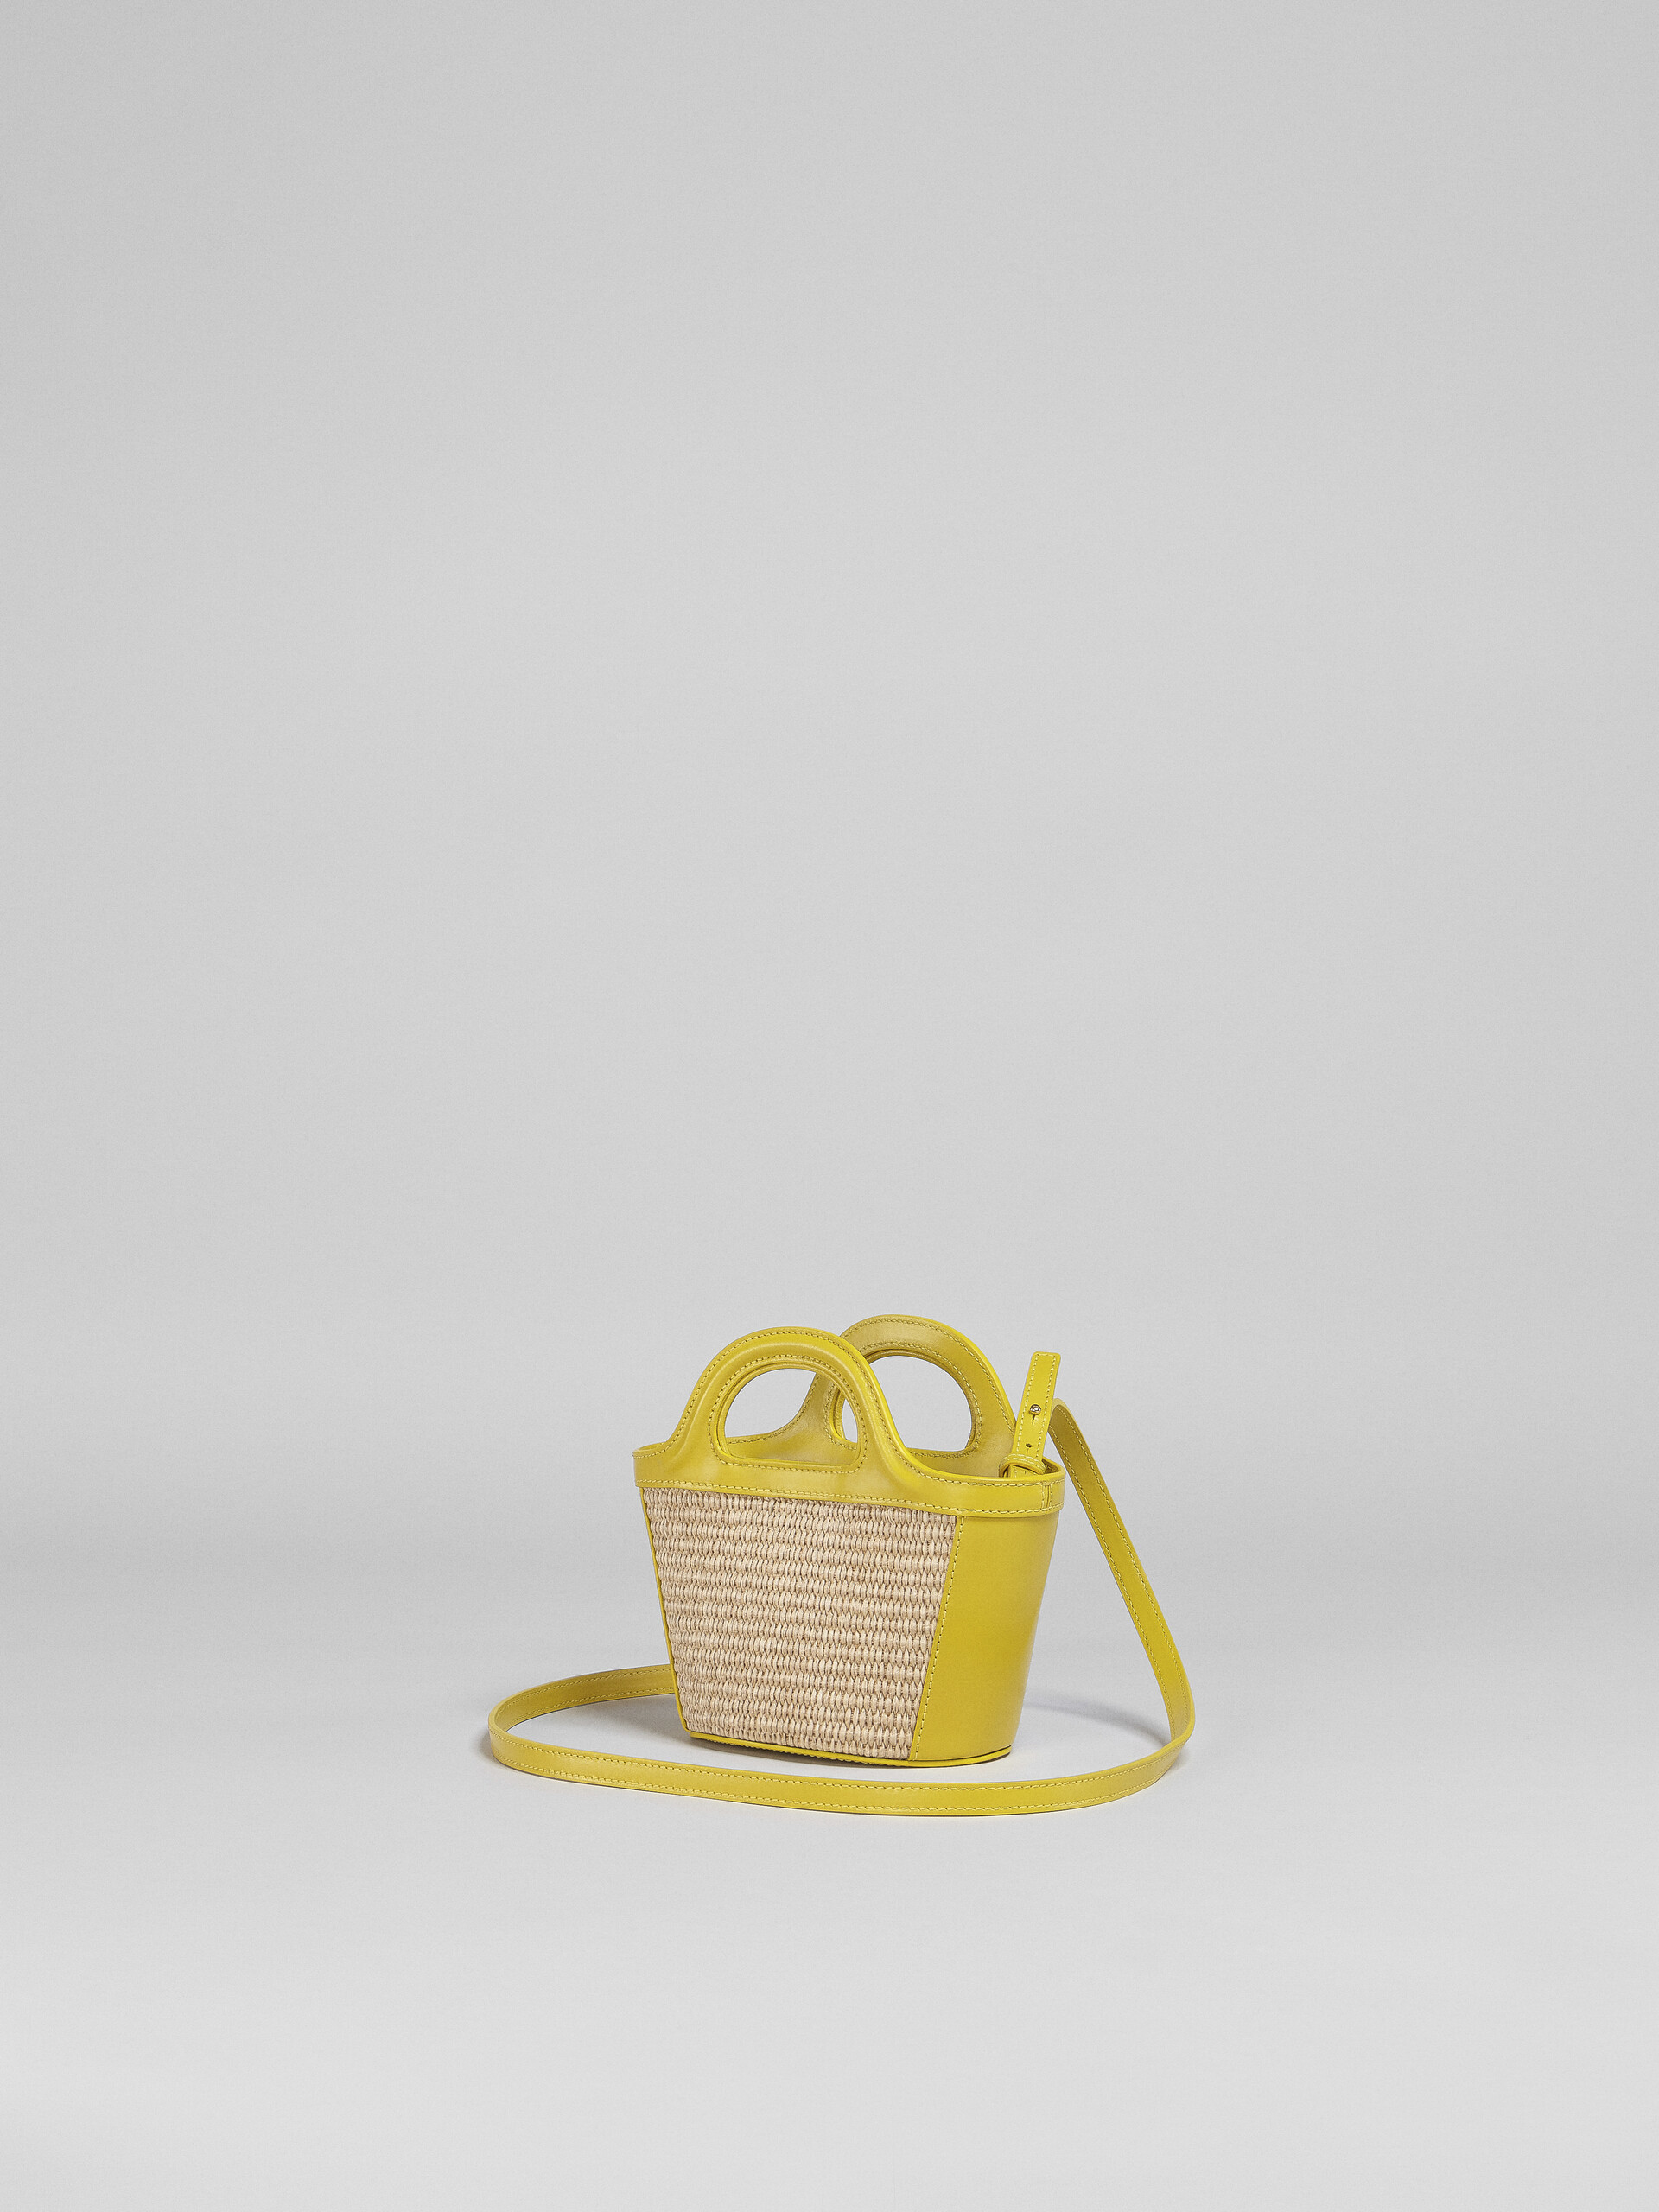 TROPICALIA micro bag in yellow leather and raffia - Handbag - Image 2